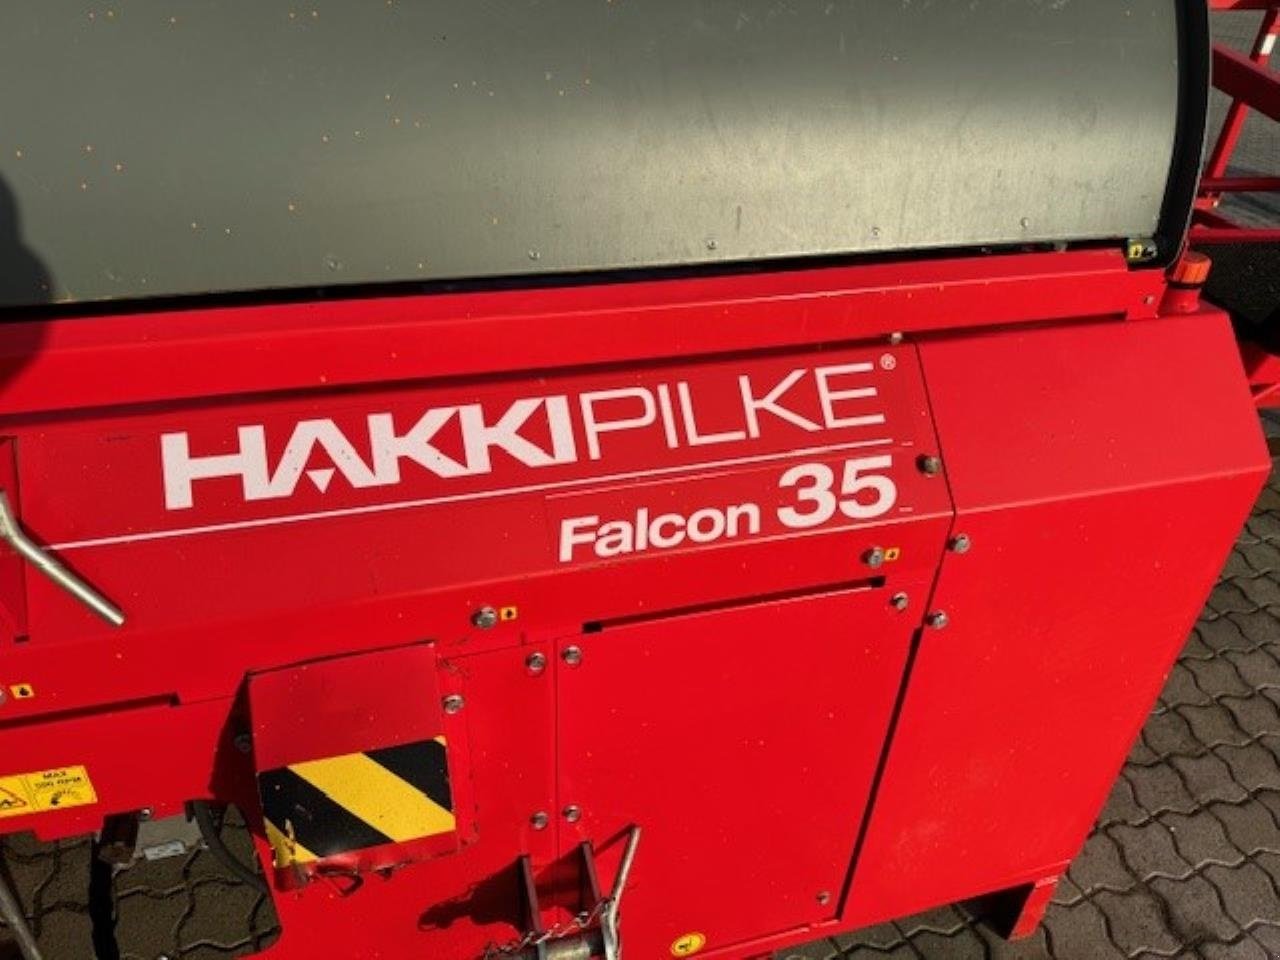 Holzspalter типа Hakki Pilke FALCON 35 TRÆKLØVER, Gebrauchtmaschine в Brønderslev (Фотография 2)